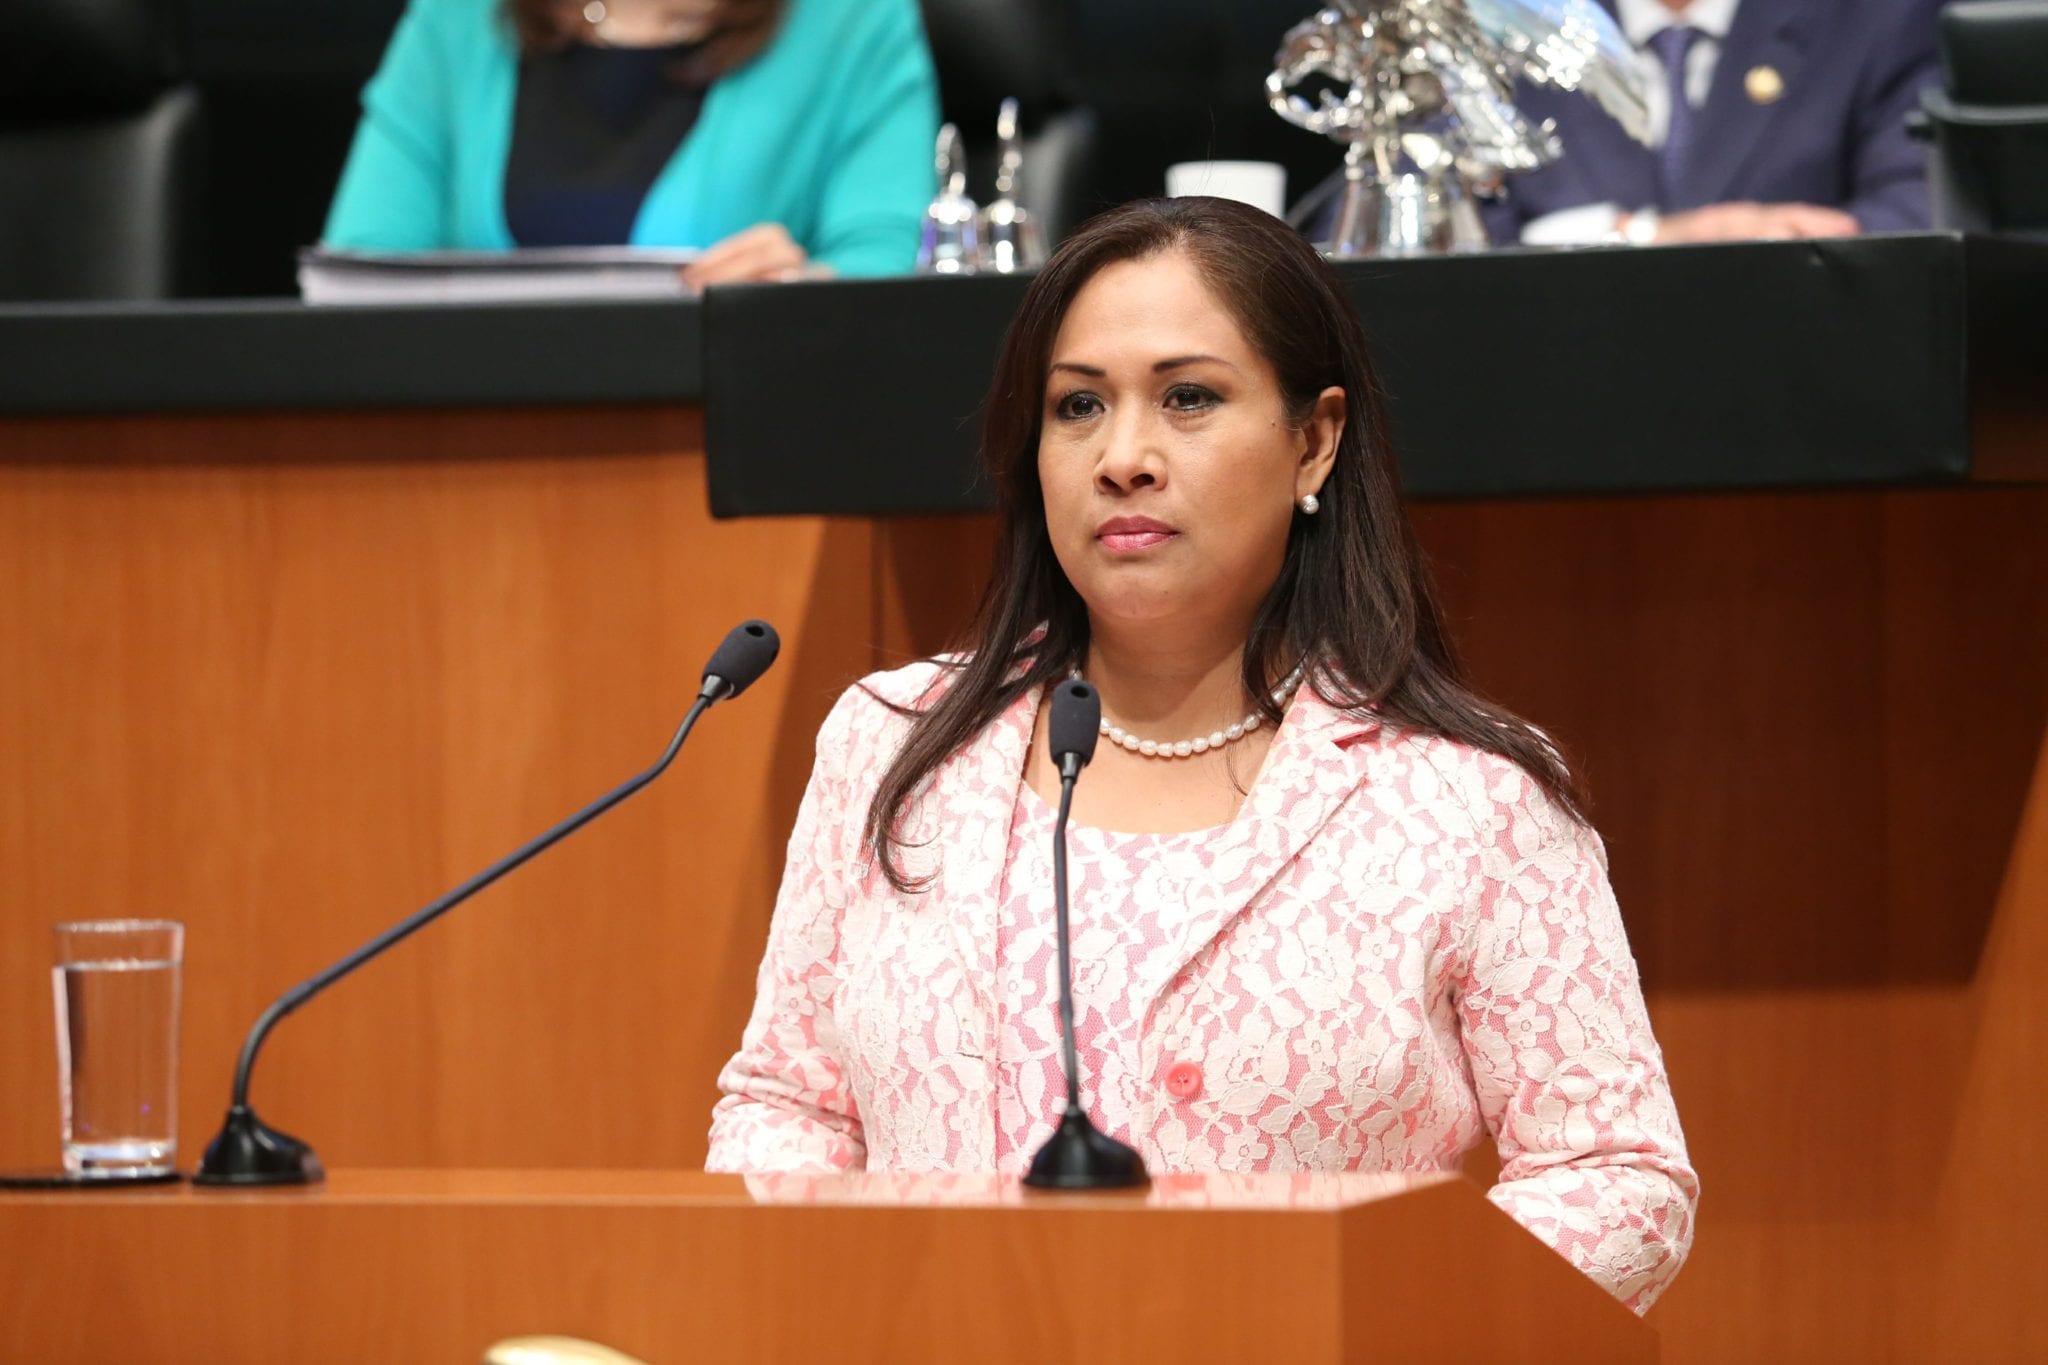 Sonia Mendoza